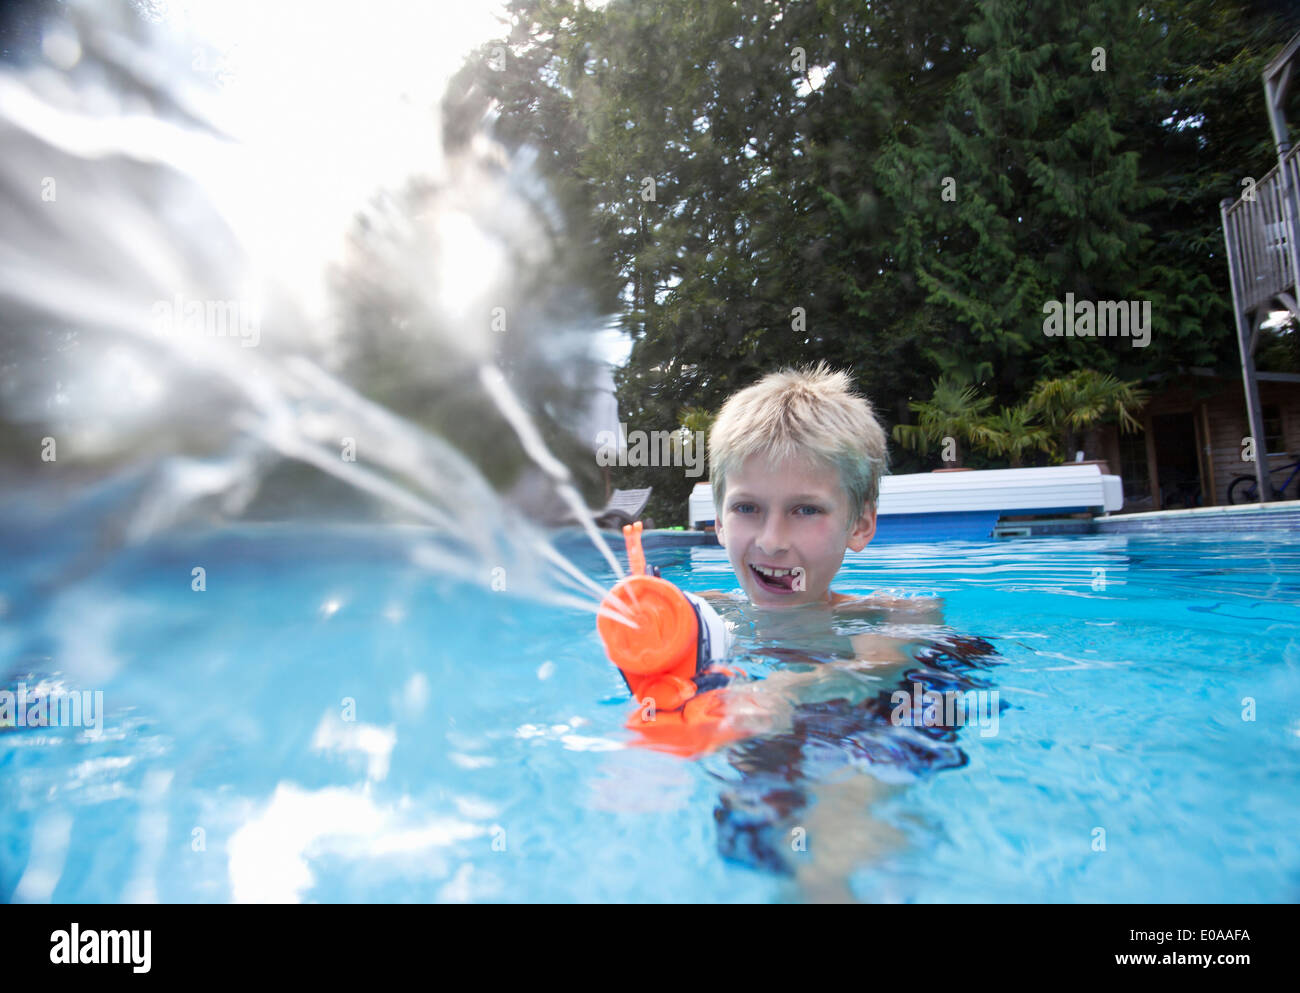 Boy in swimming pool squirting water gun Stock Photo